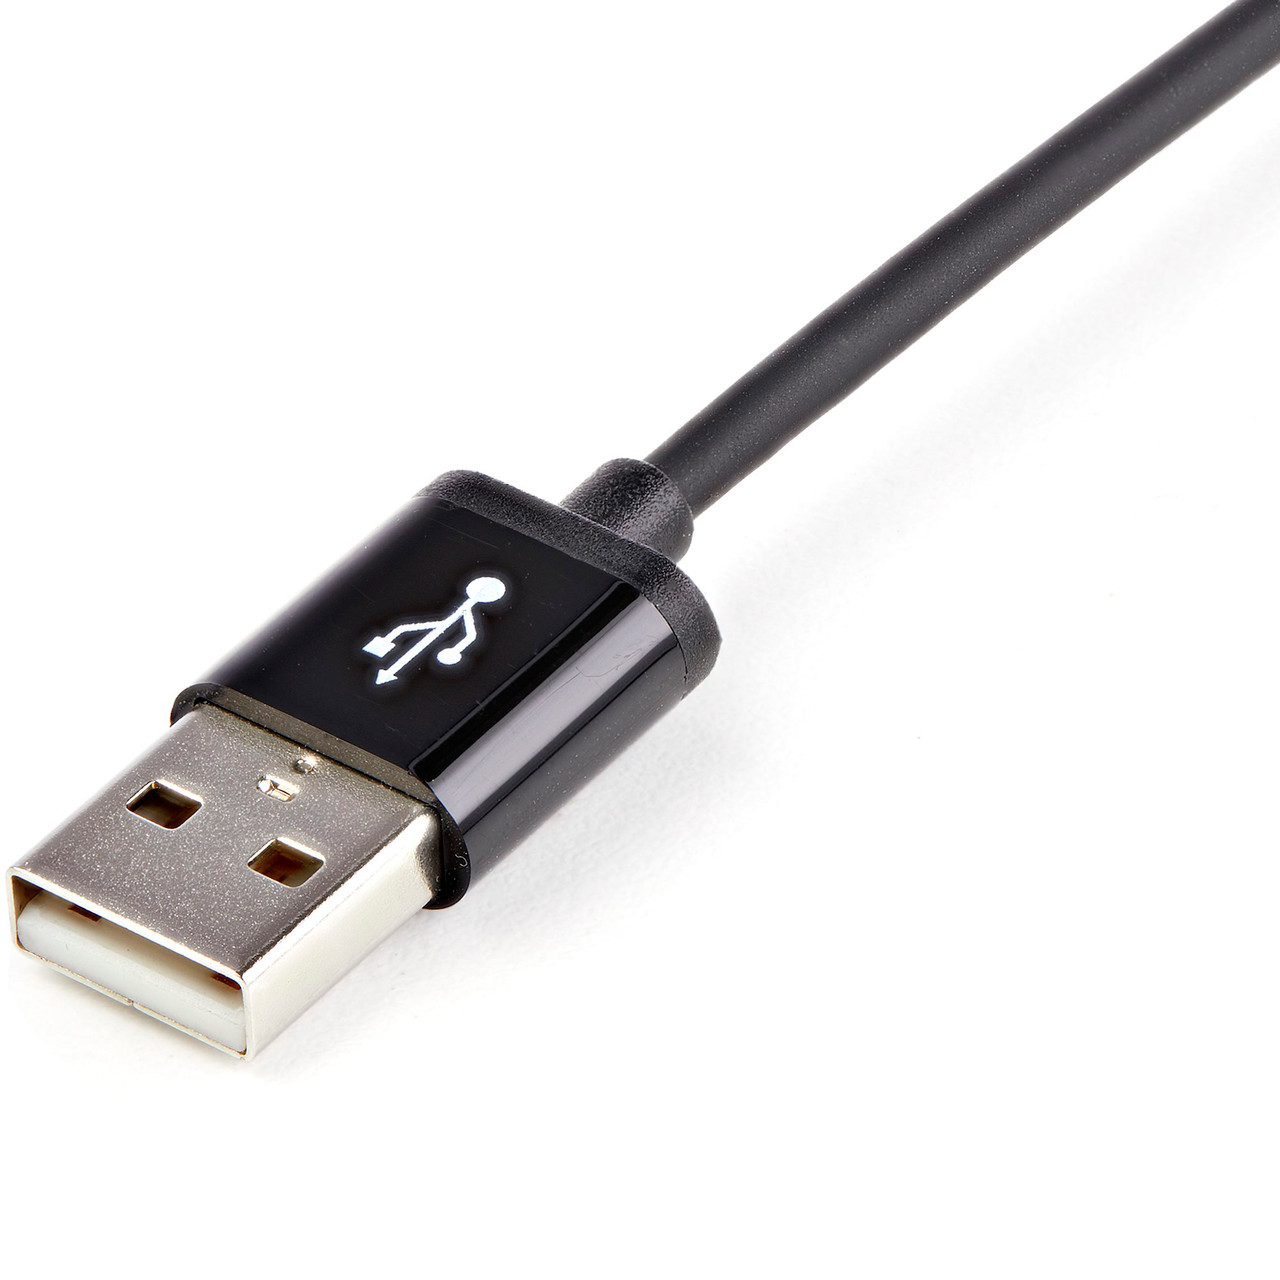 StarTech.com USB C to Micro USB Cable 2m 6ft - USB-C to Micro USB Charge  Cable - USB 2.0 Type C to Micro B - Thunderbolt 3 Compatible (USB2CUB2M) -  USB-C cable 